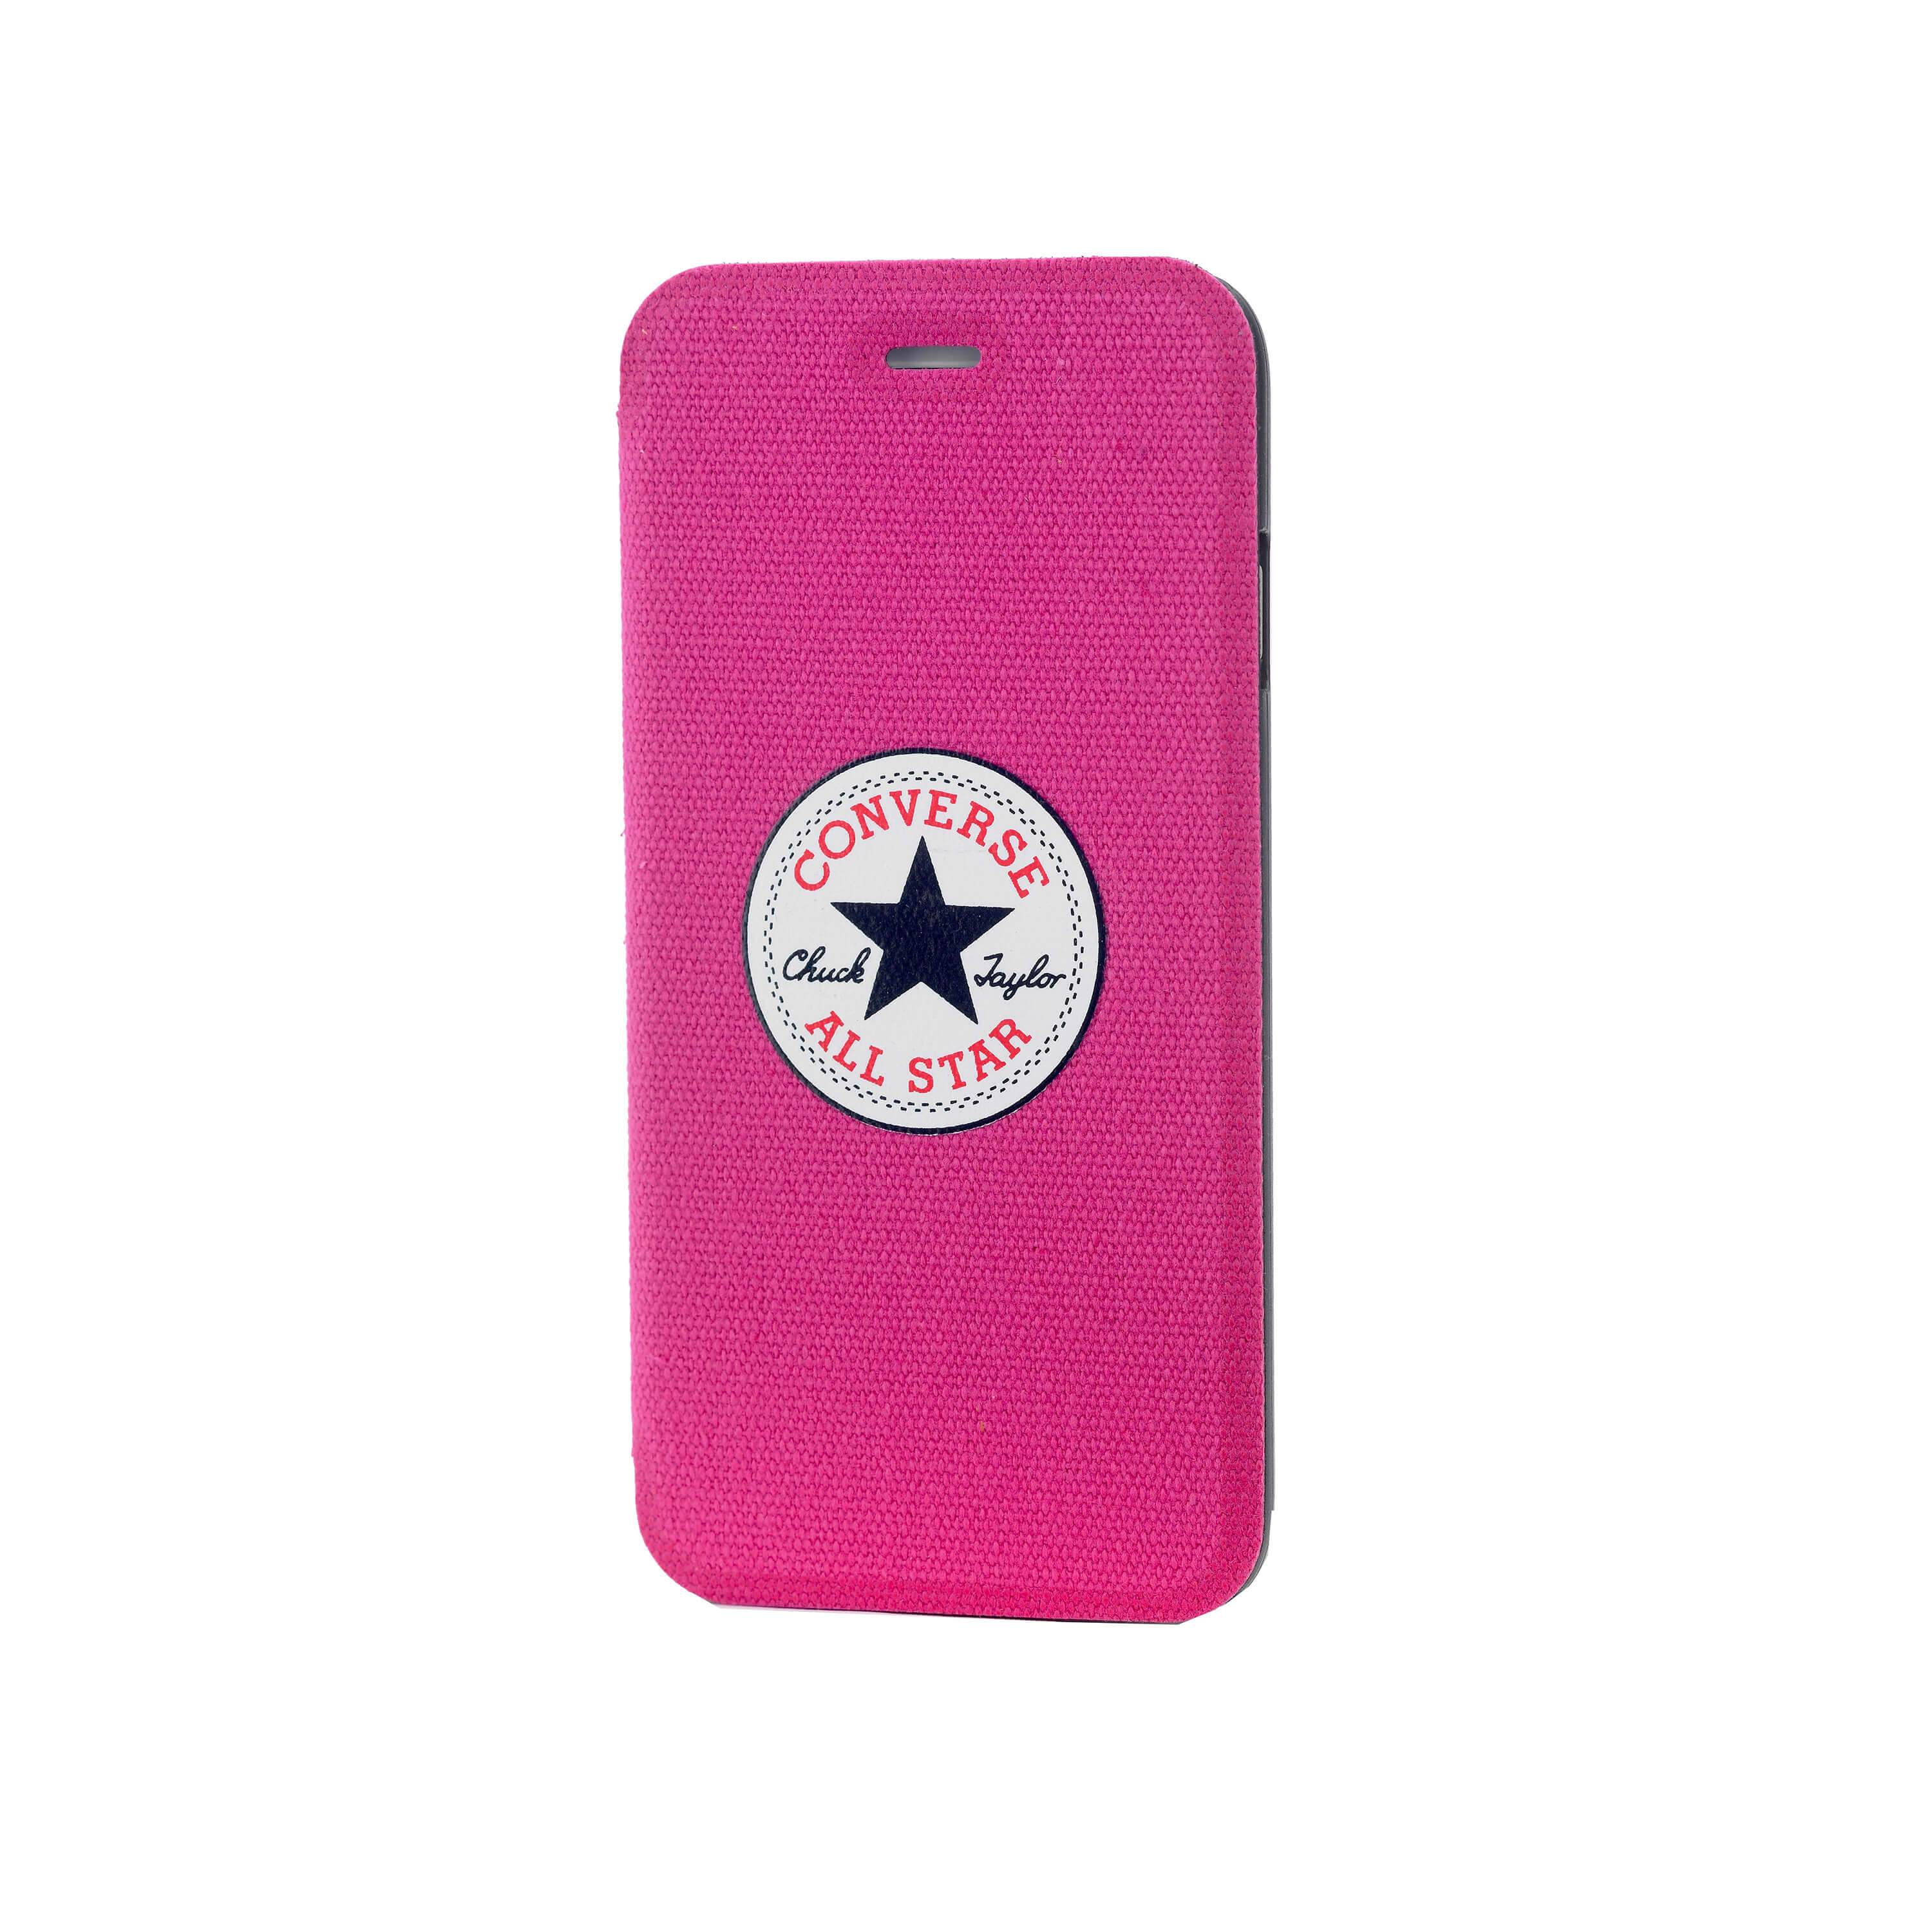 Wallet Case Pink - iPhone 6 Plus